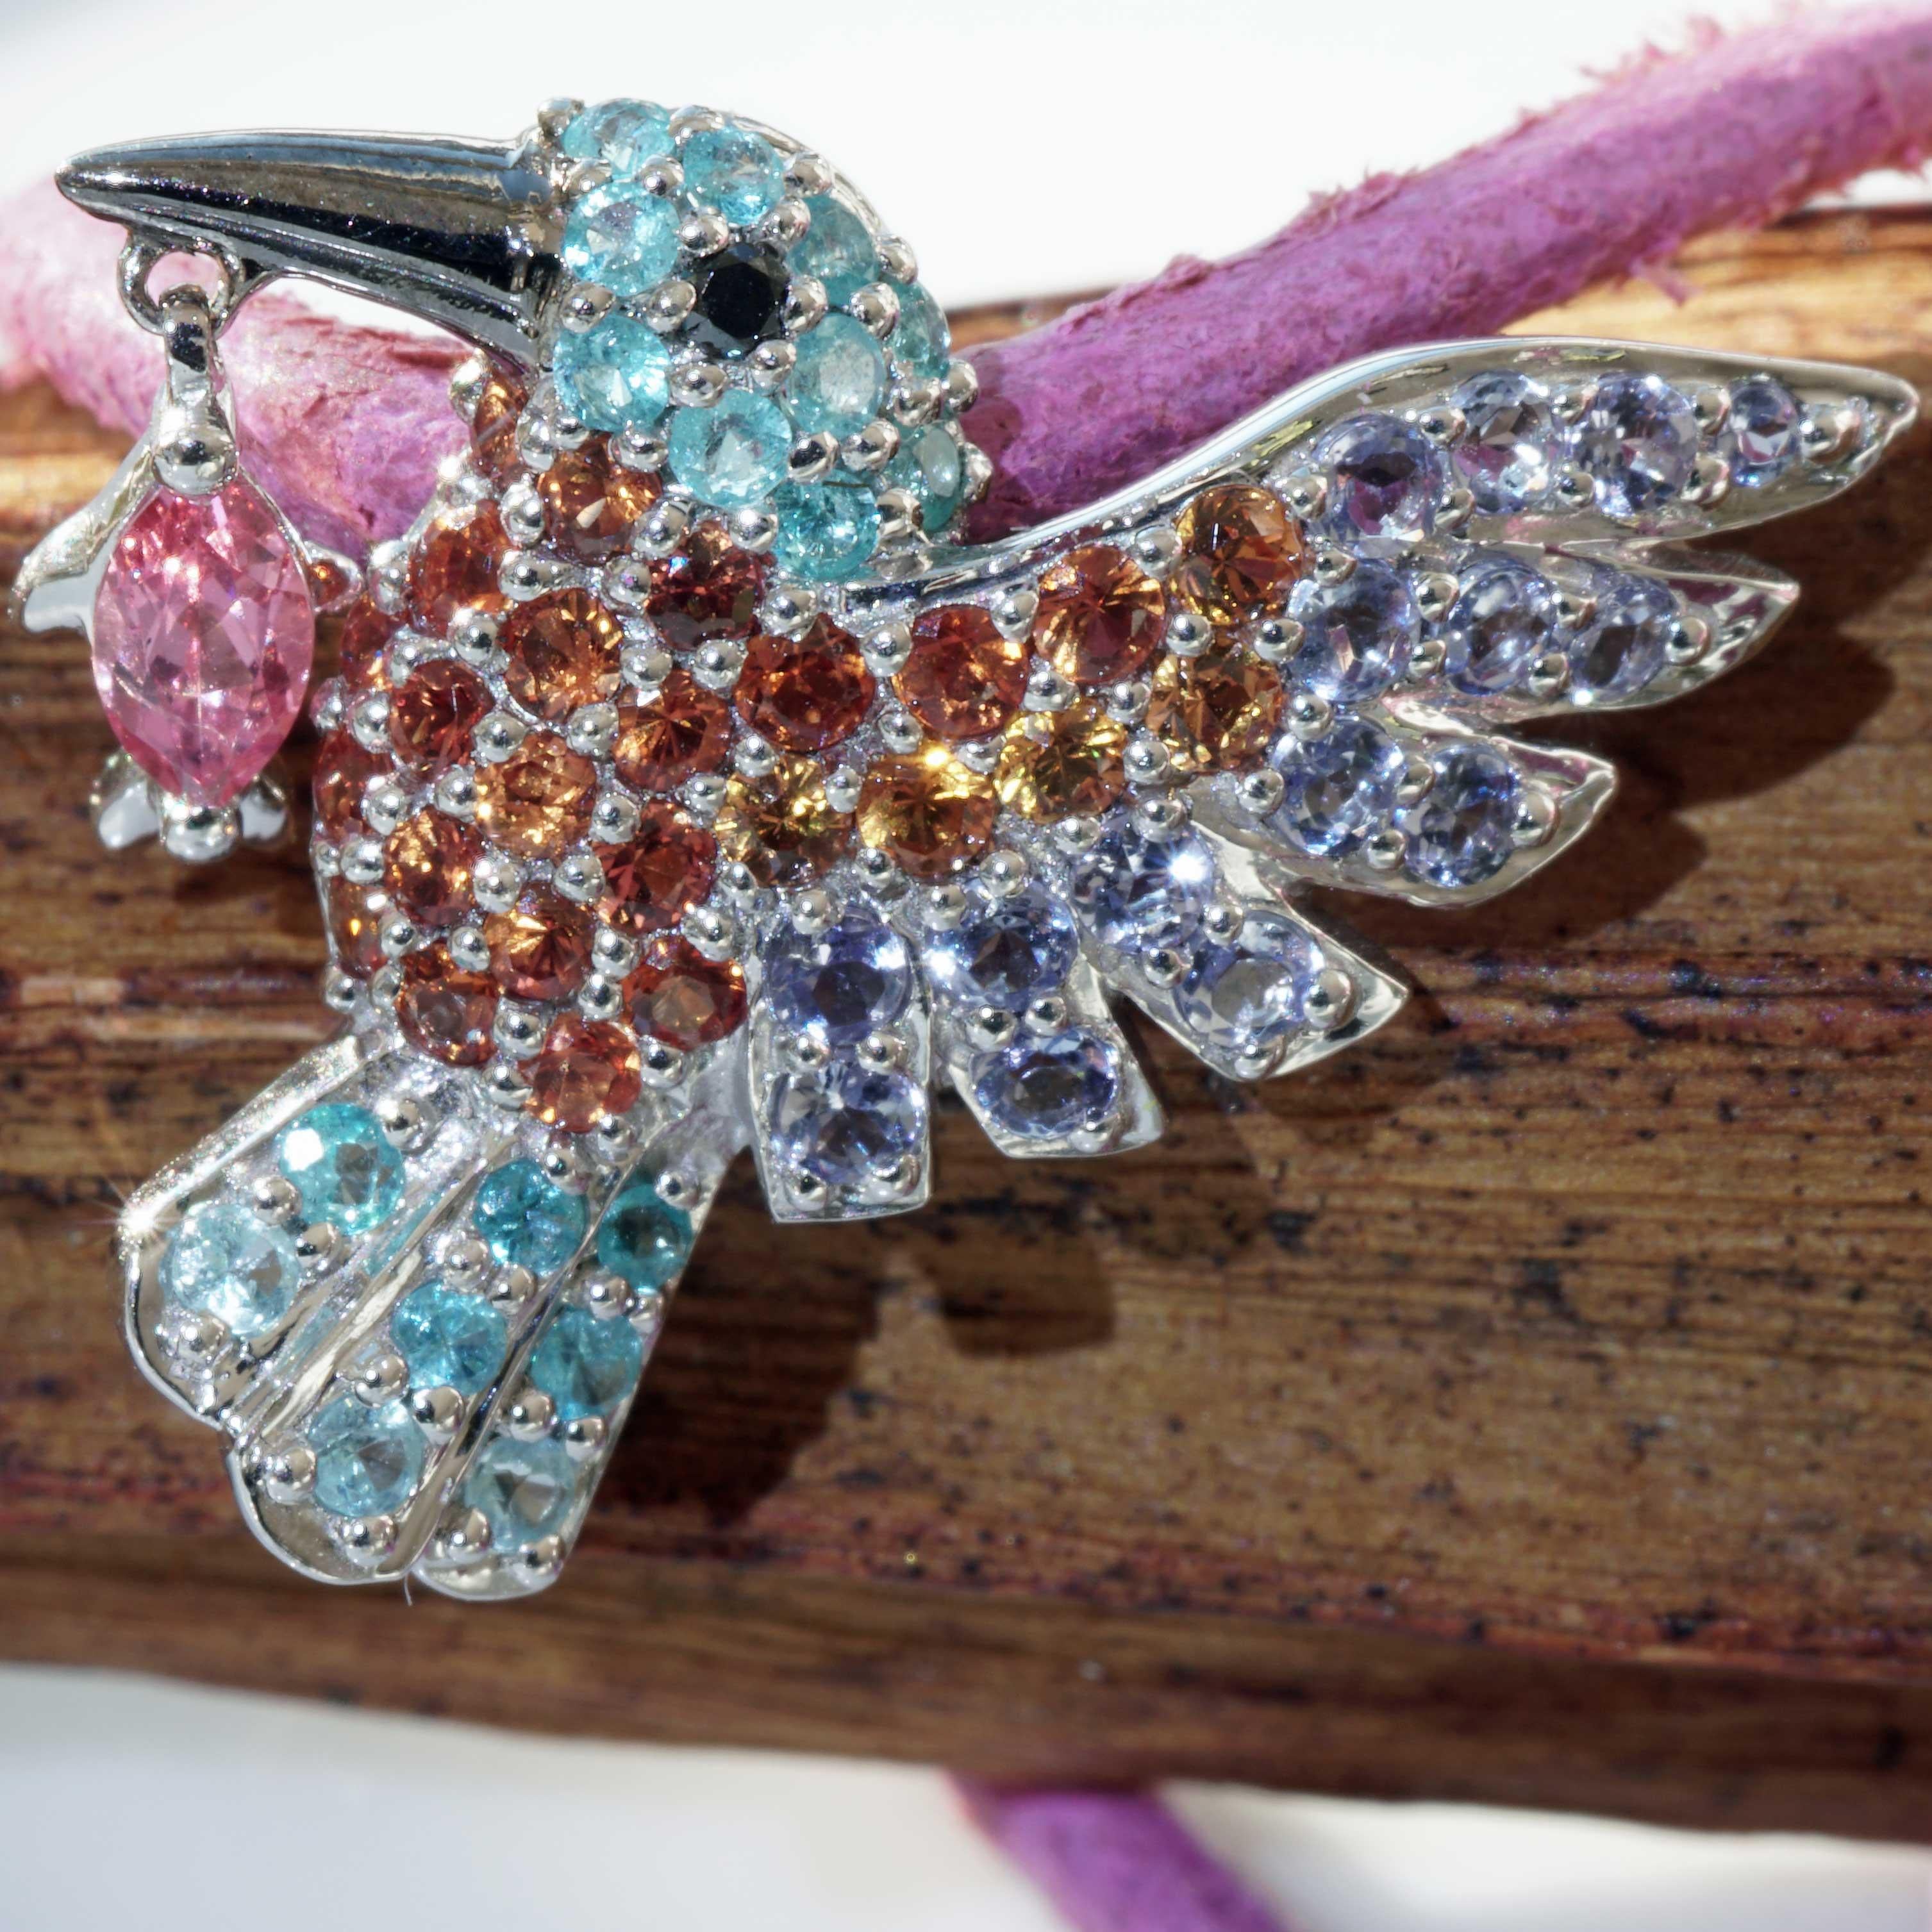 Kingfisher Bird Pendant Paraiba Tourmaline and Spinel most extravagant Colors  1